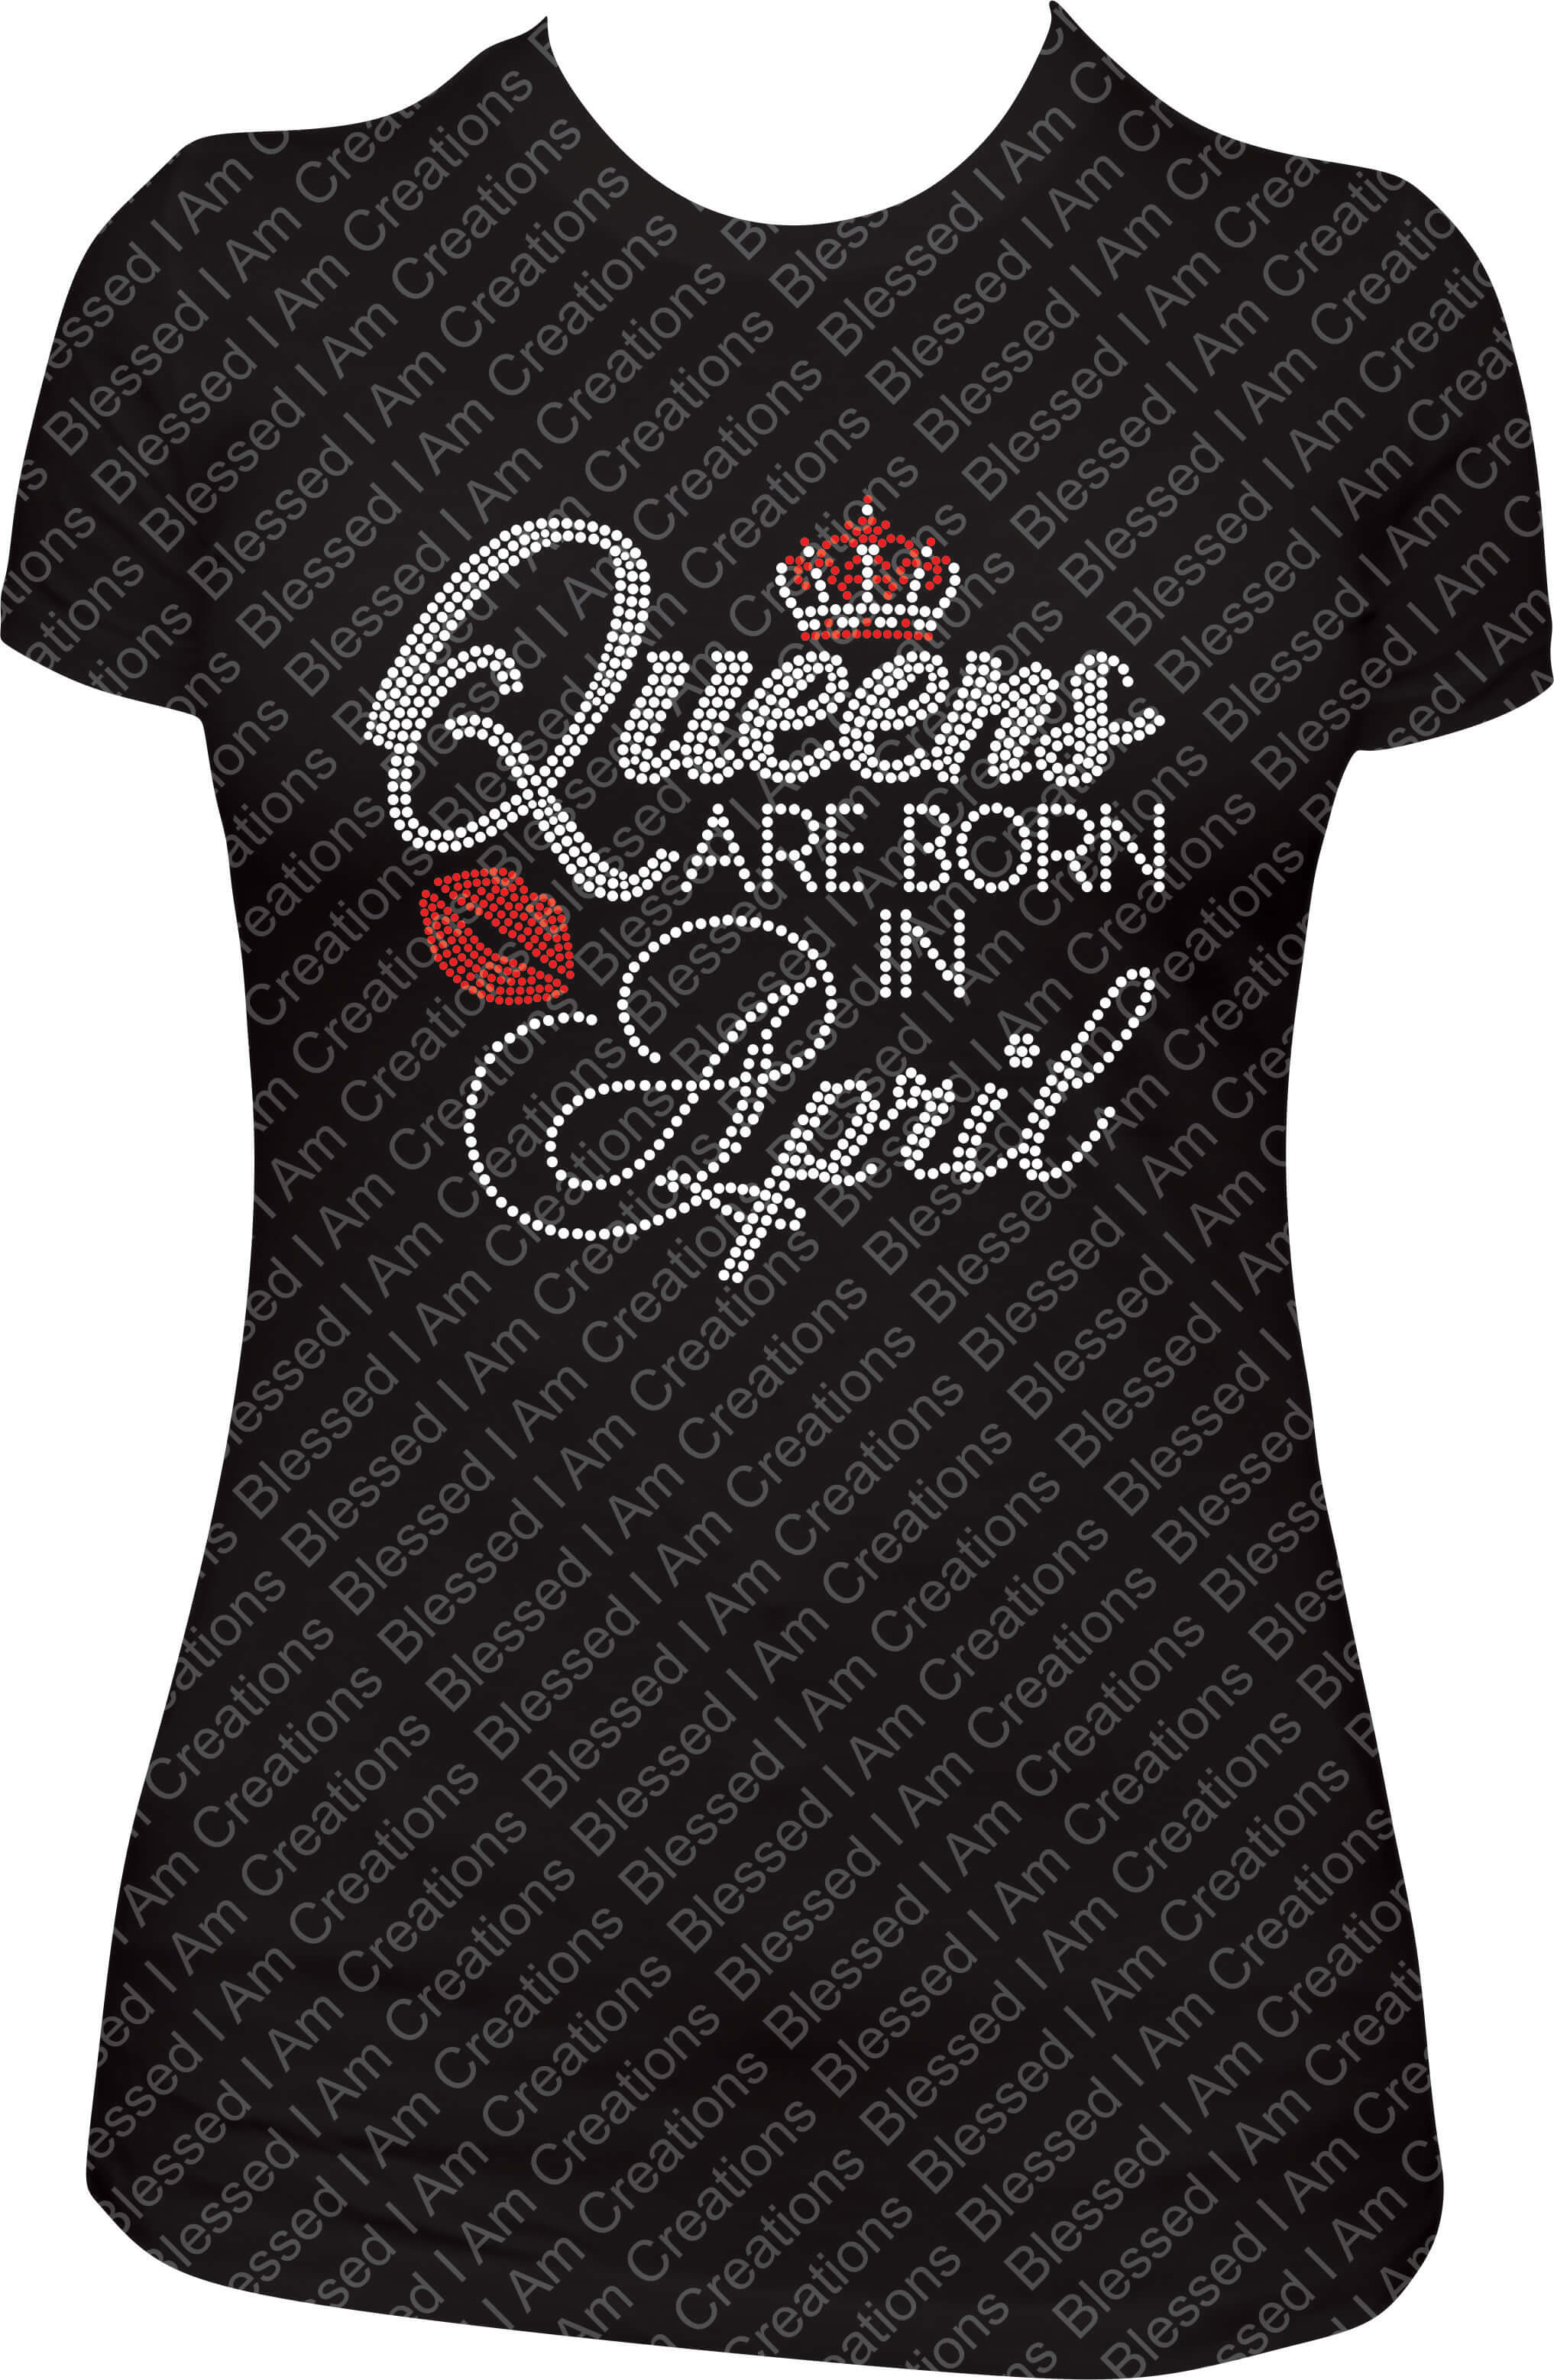 Black Queen Rhinestone Shirt Queen Bling shirt – Blessed I Am